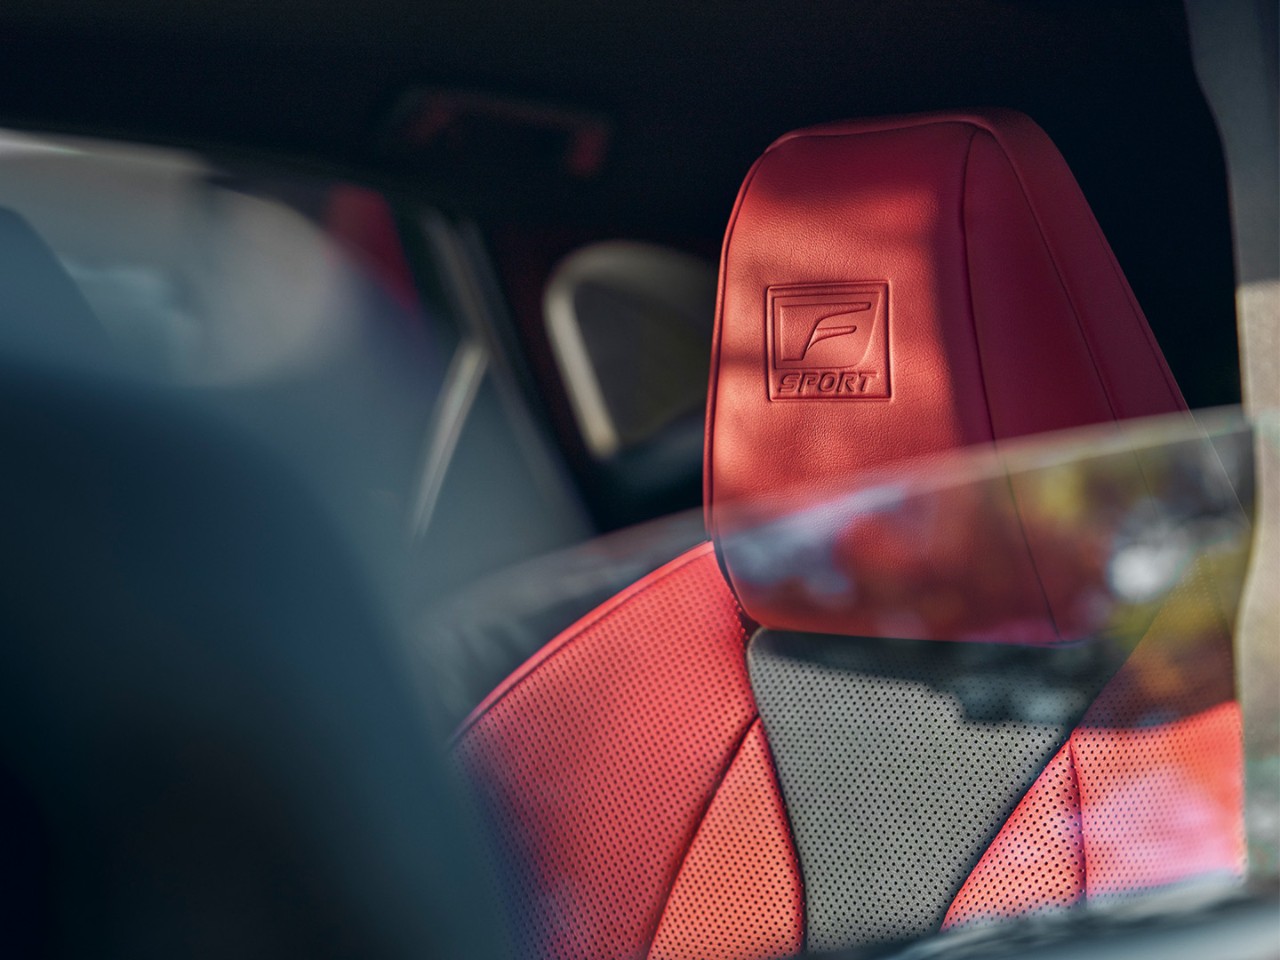 Lexus F Sport seat